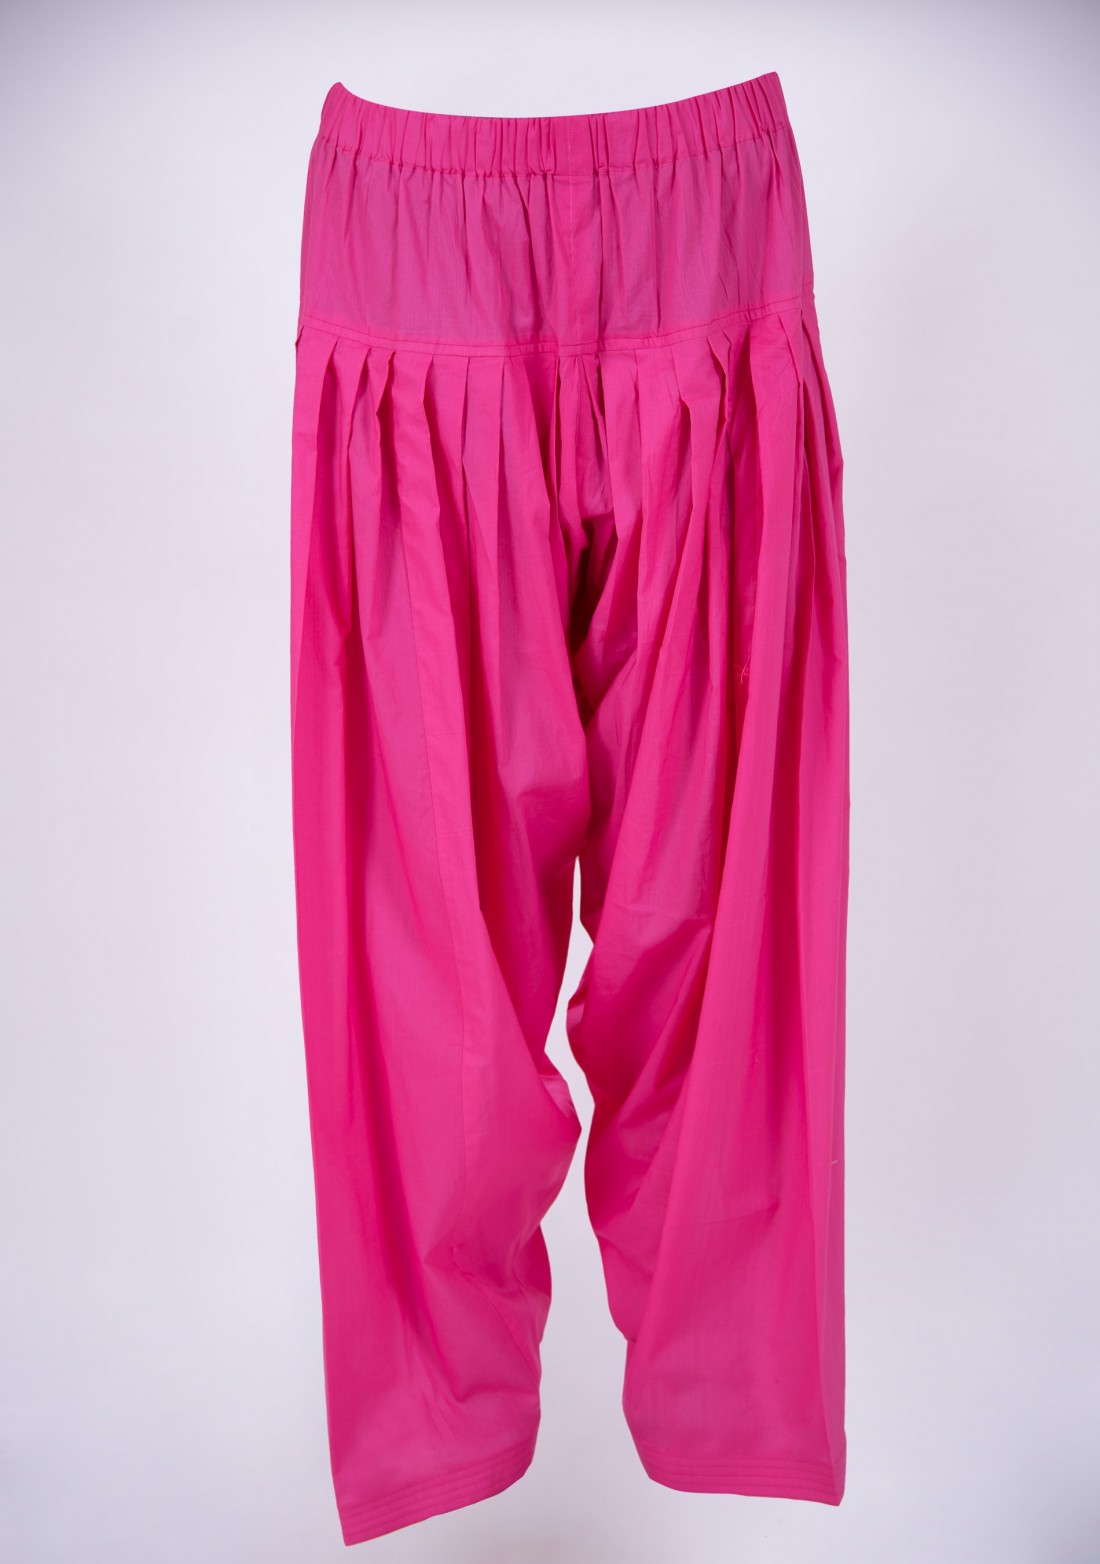 Pink Printed Salwar Suit